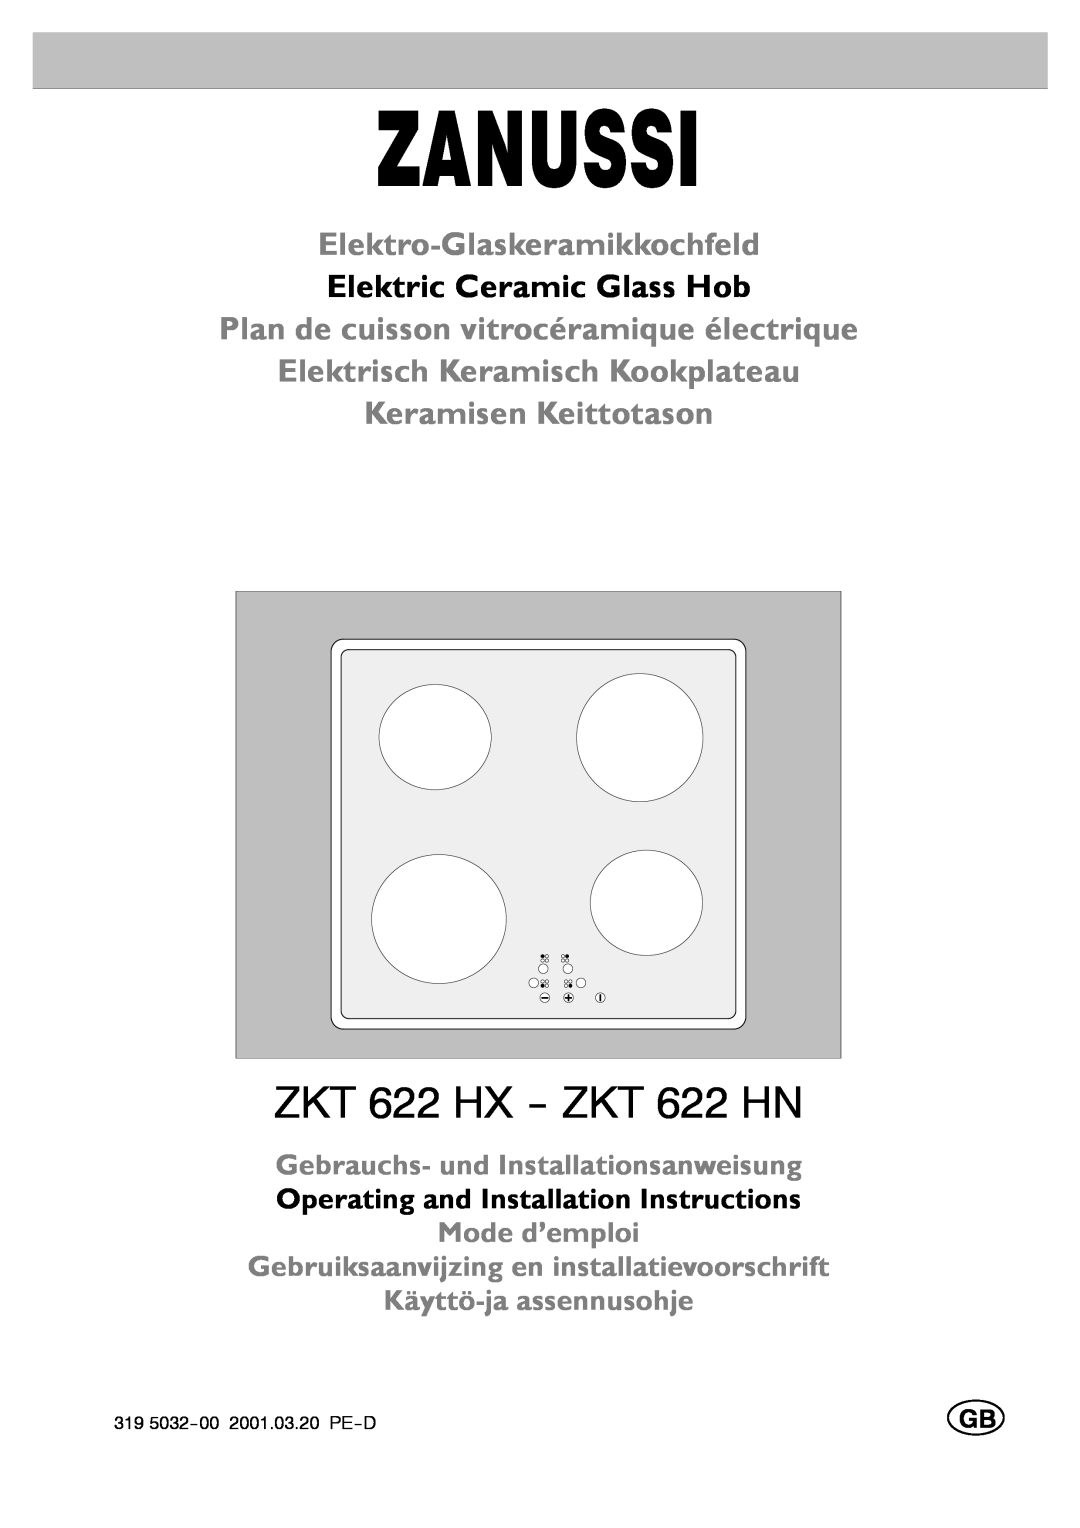 Zanussi installation instructions ZKT 622 HX -- ZKT 622 HN, Elektro-Glaskeramikkochfeld, Elektric Ceramic Glass Hob 